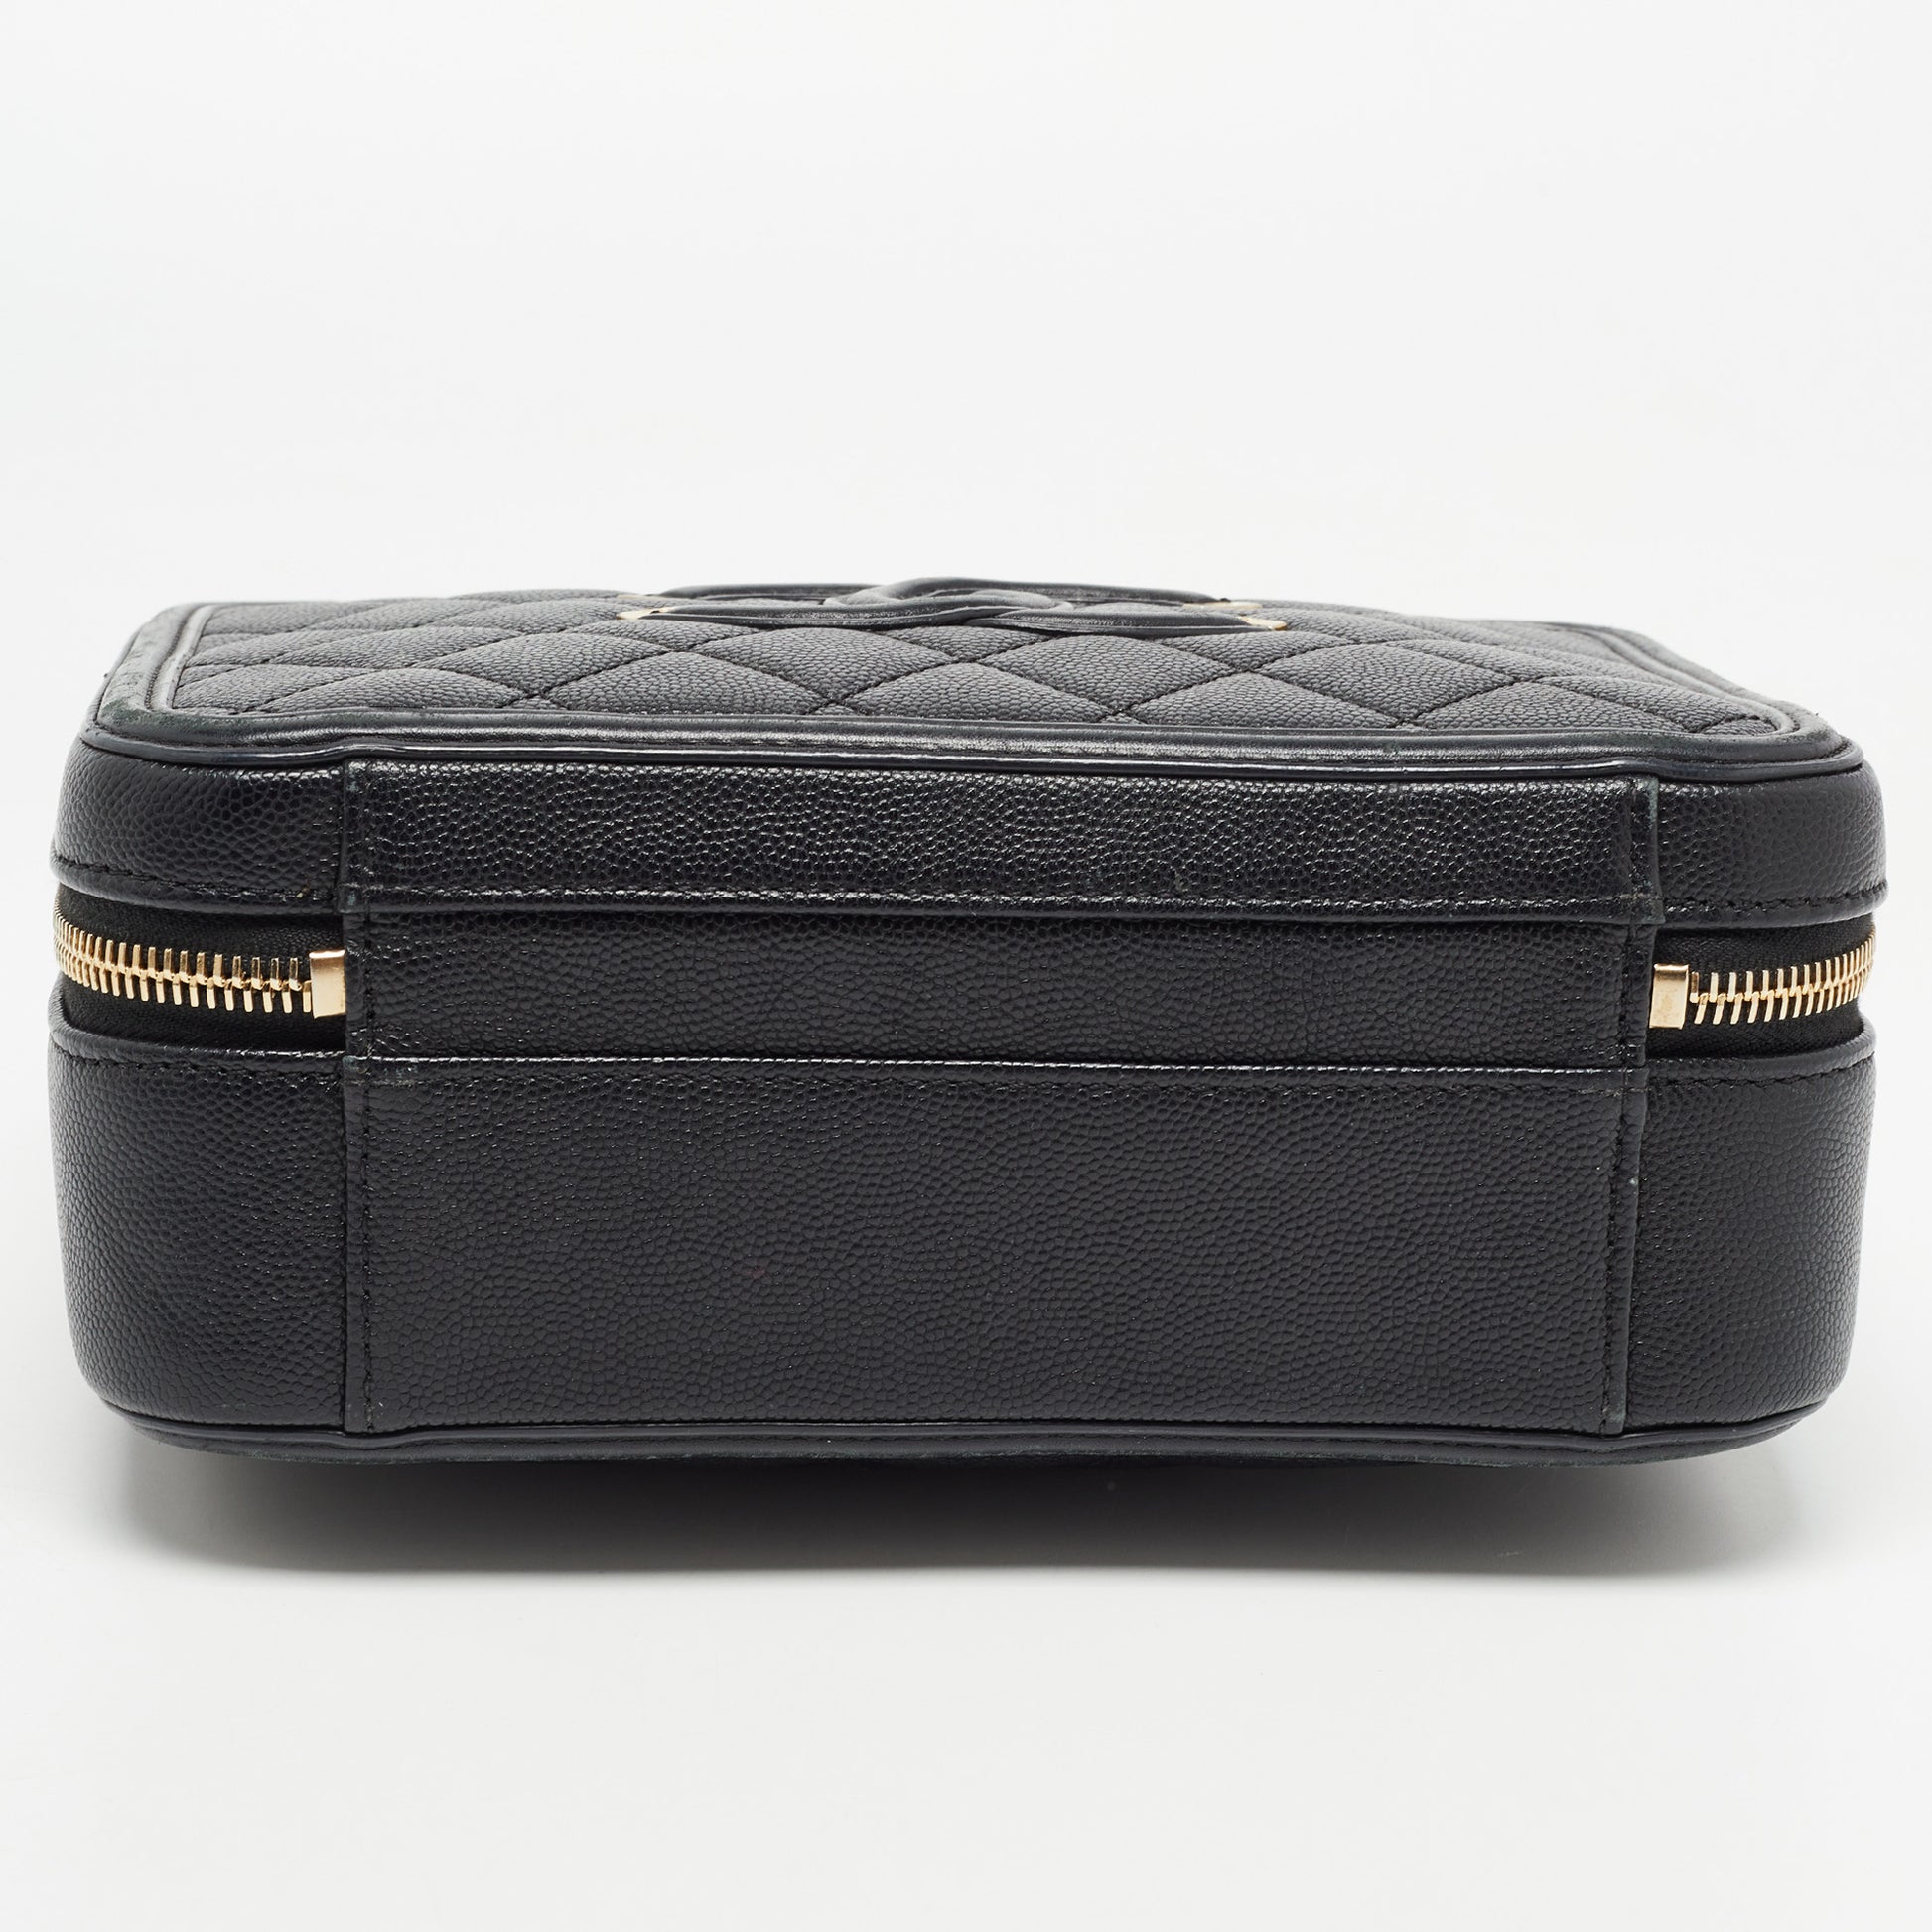 Chanel Black Quilted Caviar Leather Medium CC Filigree Vanity Case Bag